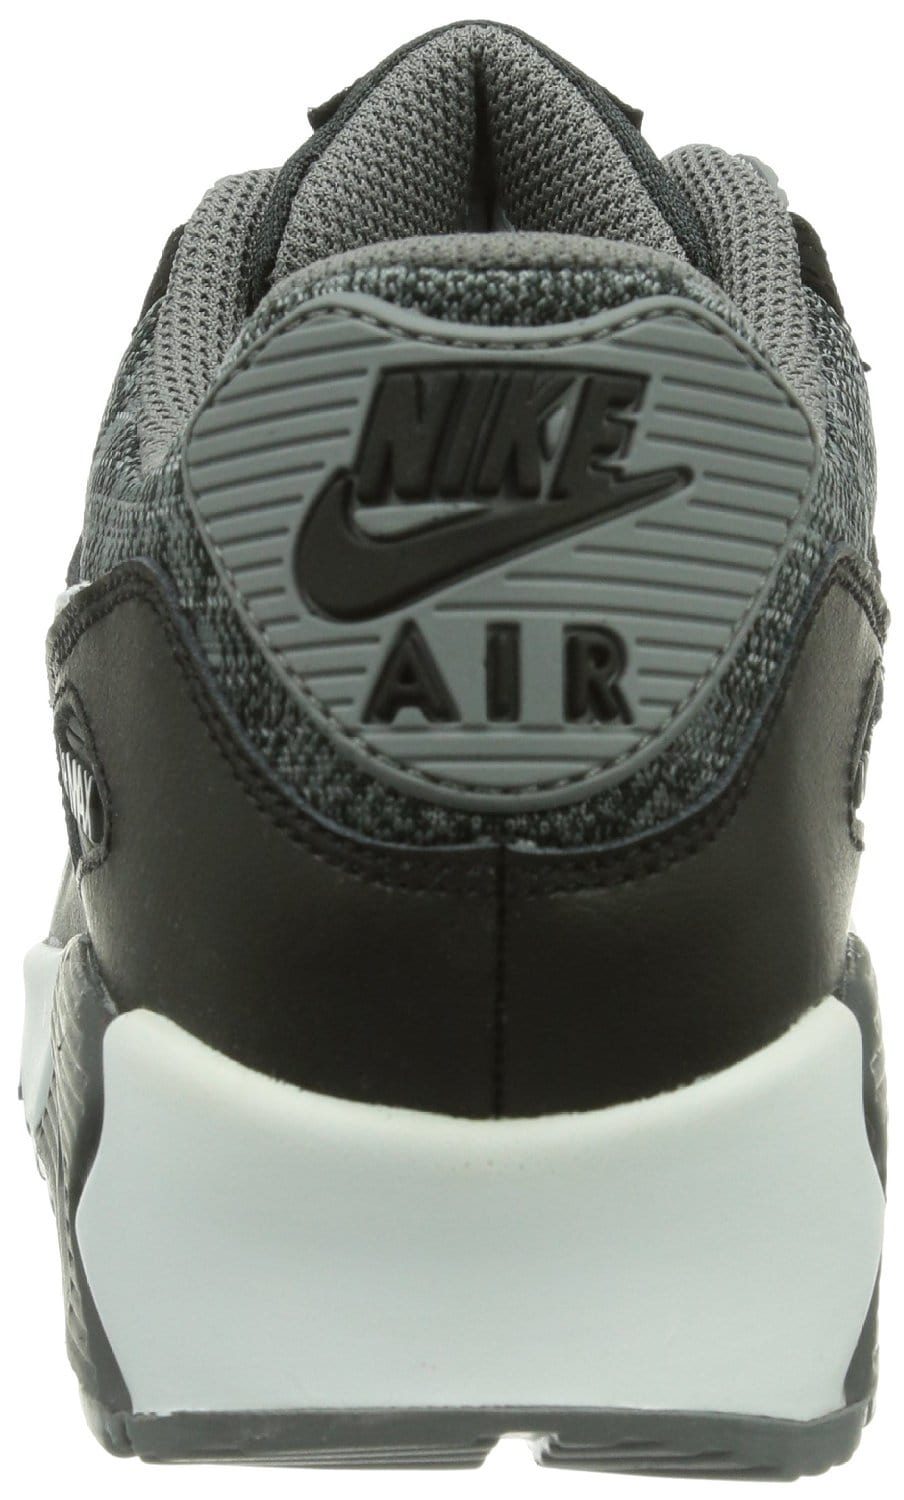 Nike NIKE AIR JORDAN 1 MID WHITE PLAID GS 24.5cm (GS) Anthracite-White-Black-Cool Grey - JuzsportsShops